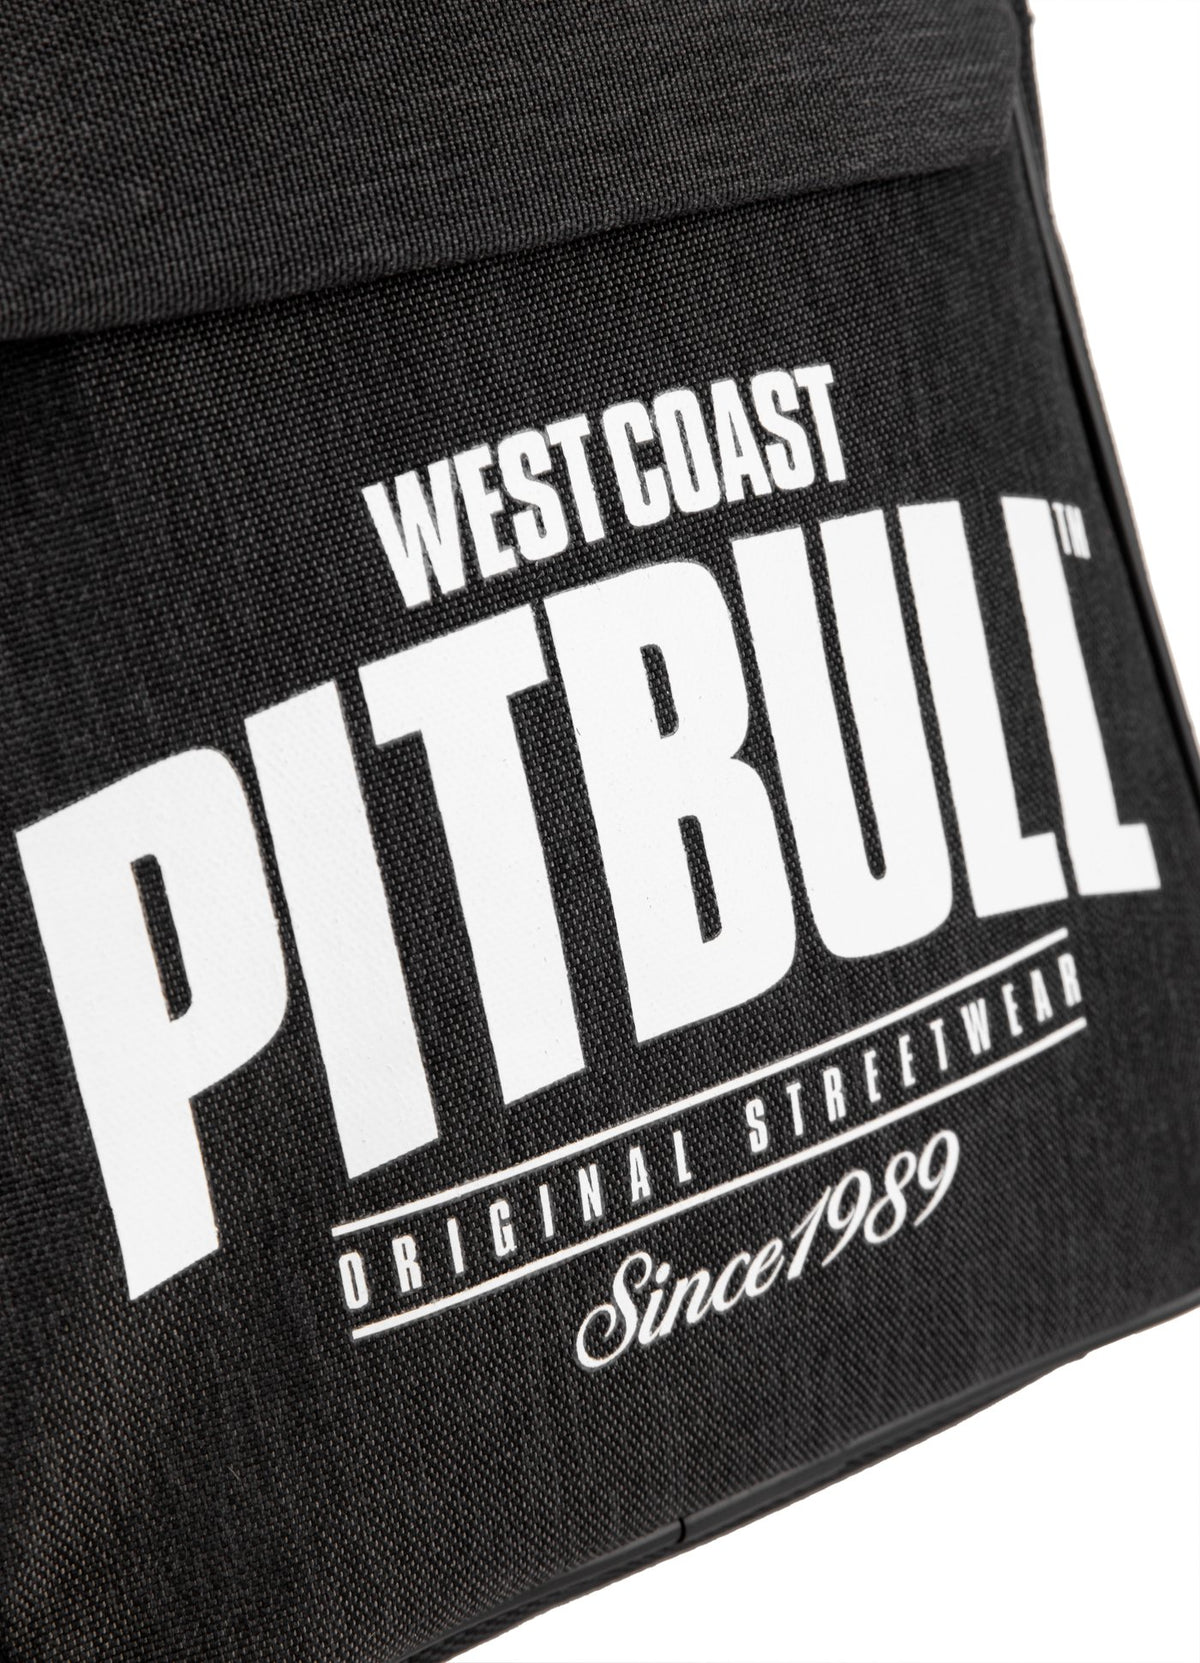 SHOULDER BAG SINCE 1989 BLACK - Pitbull West Coast U.S.A. 